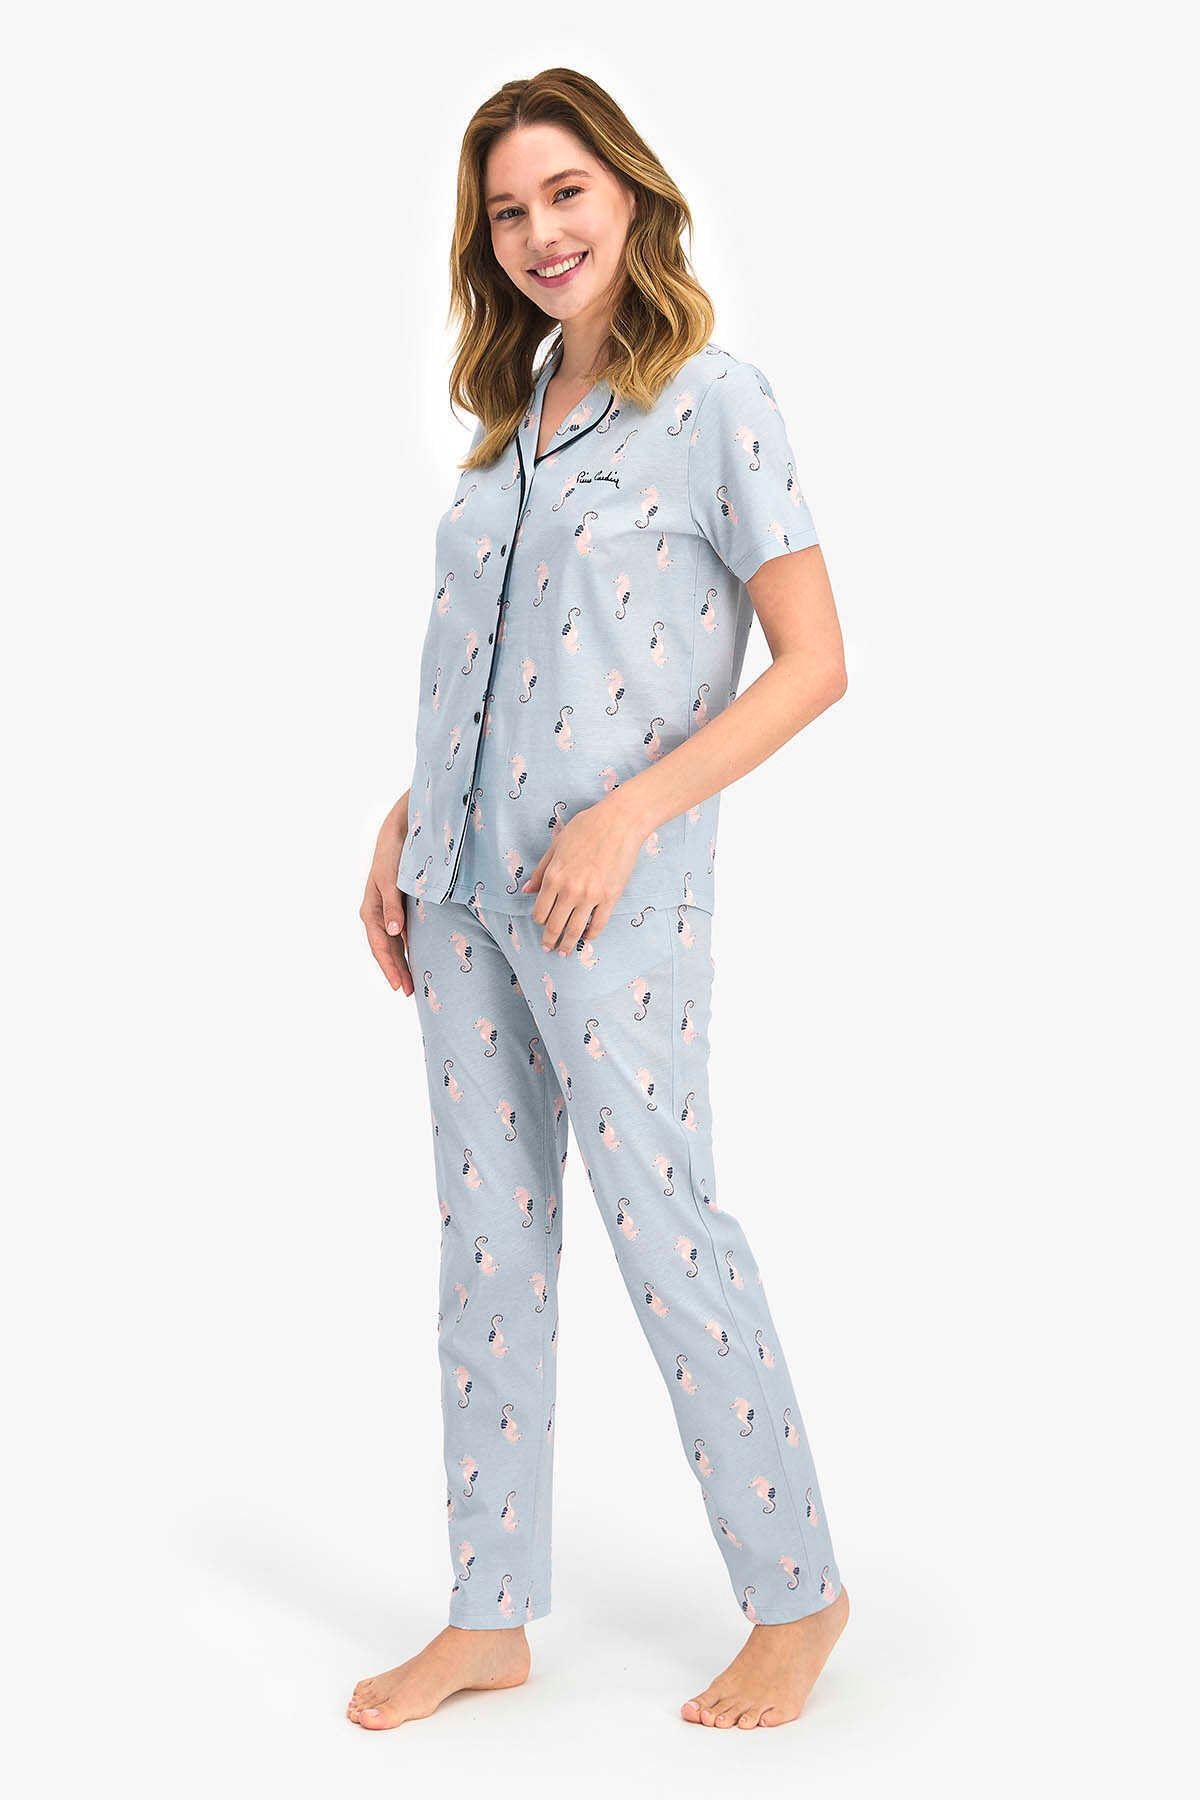 Pierre Cardin Seahorse Kadın Gömlek Pijama Buz Mavi Pc7697